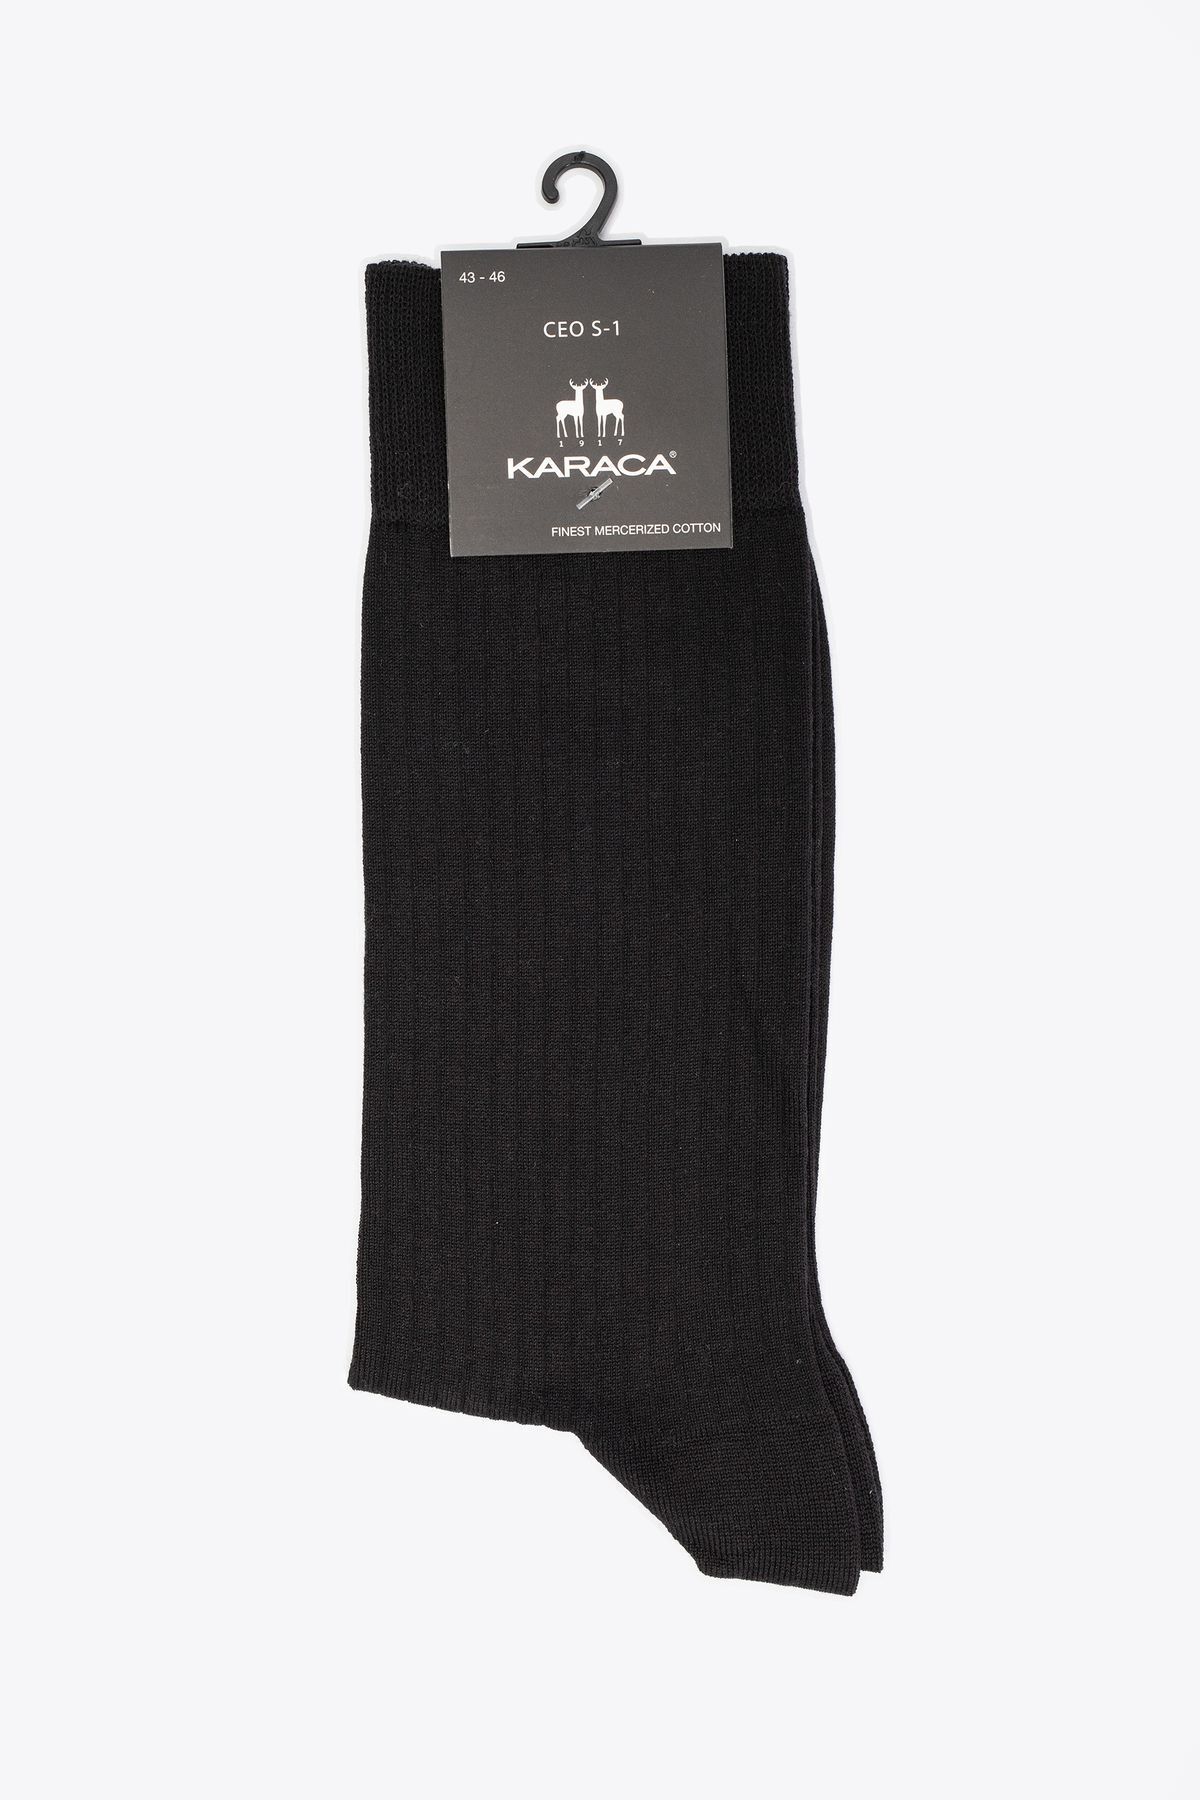 Karaca Erkek Soket Çorap-Siyah